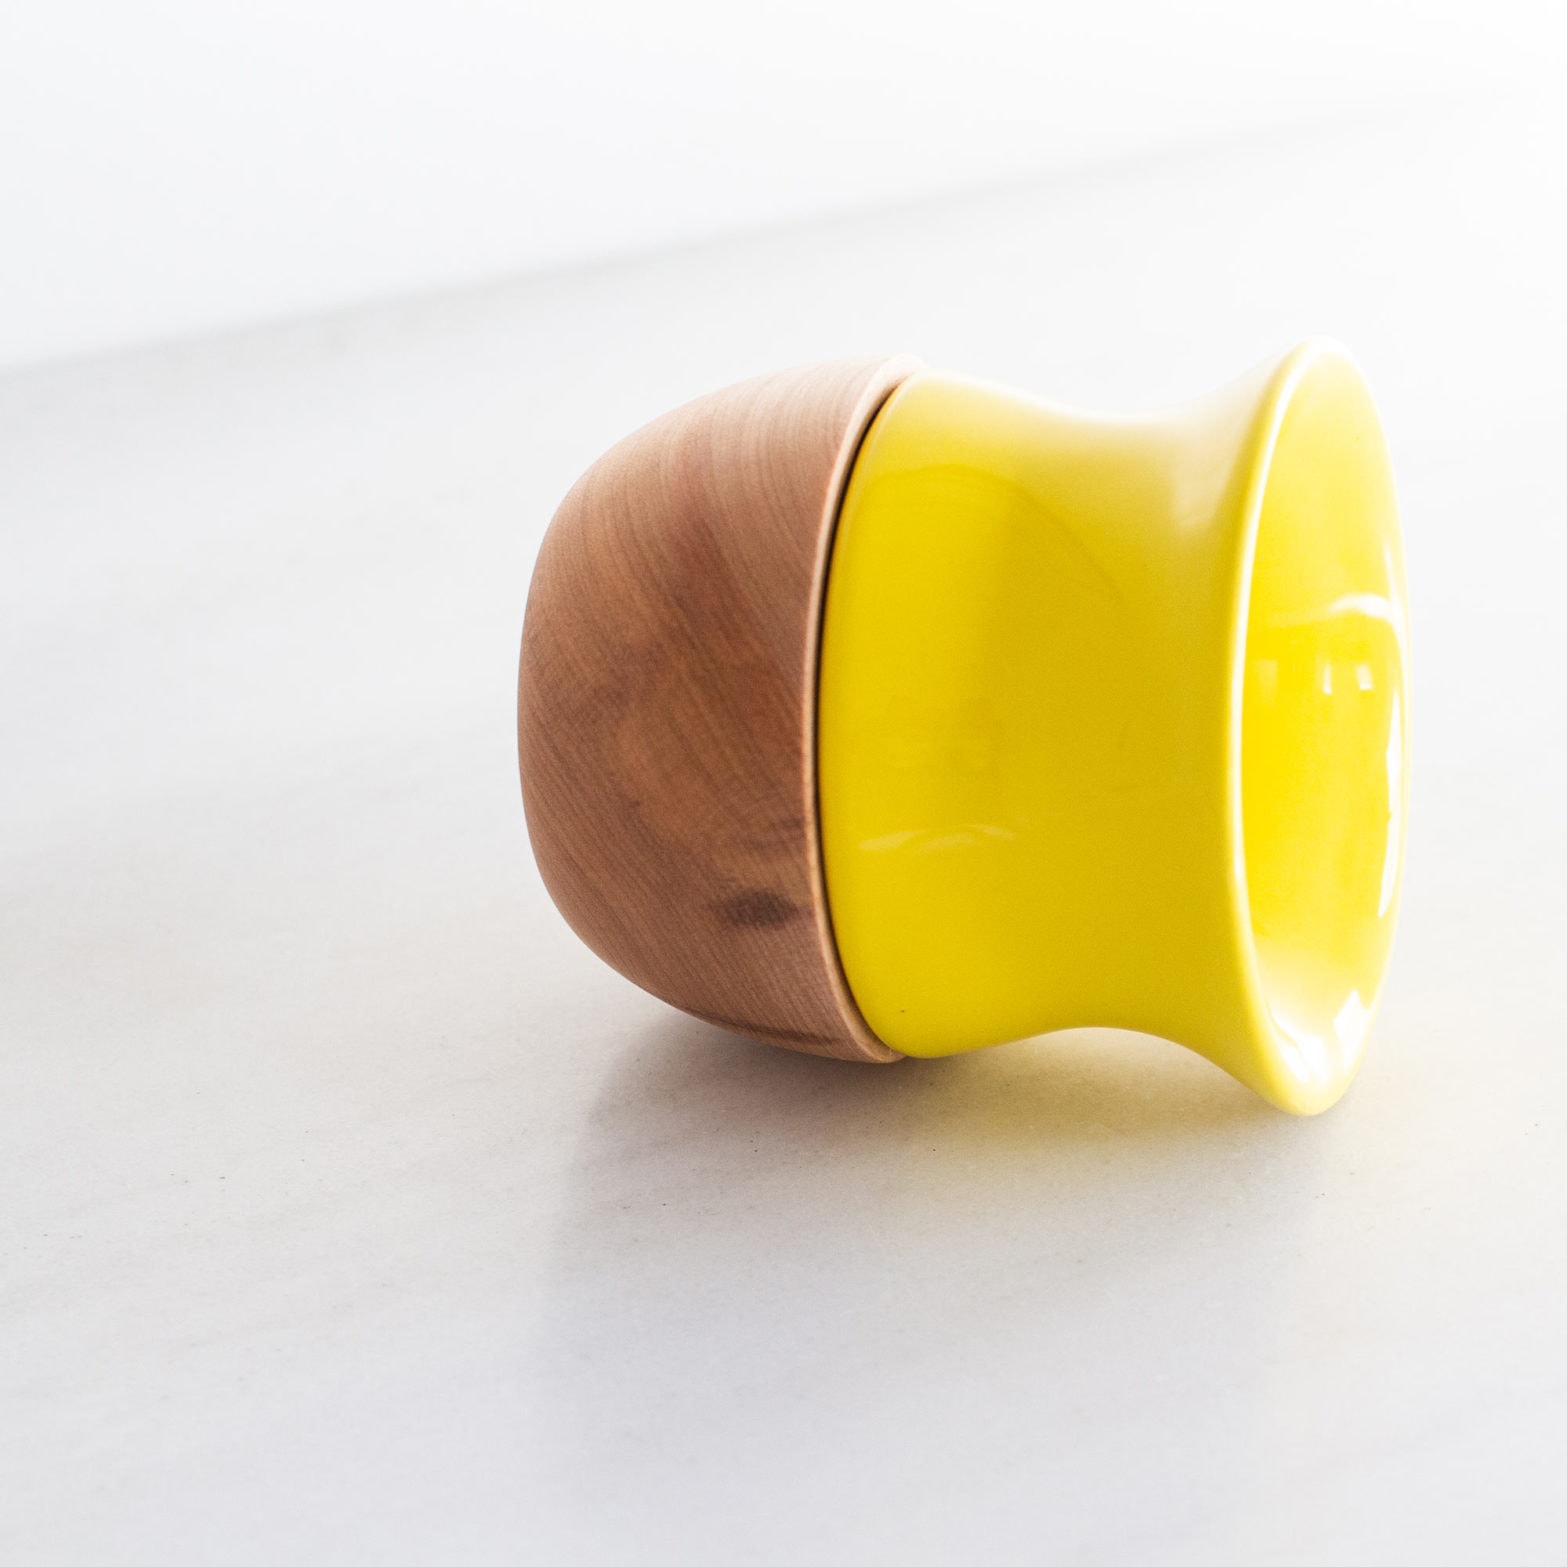 Marigold Capital Cup Original – Ceramic Yerba Mate Cup